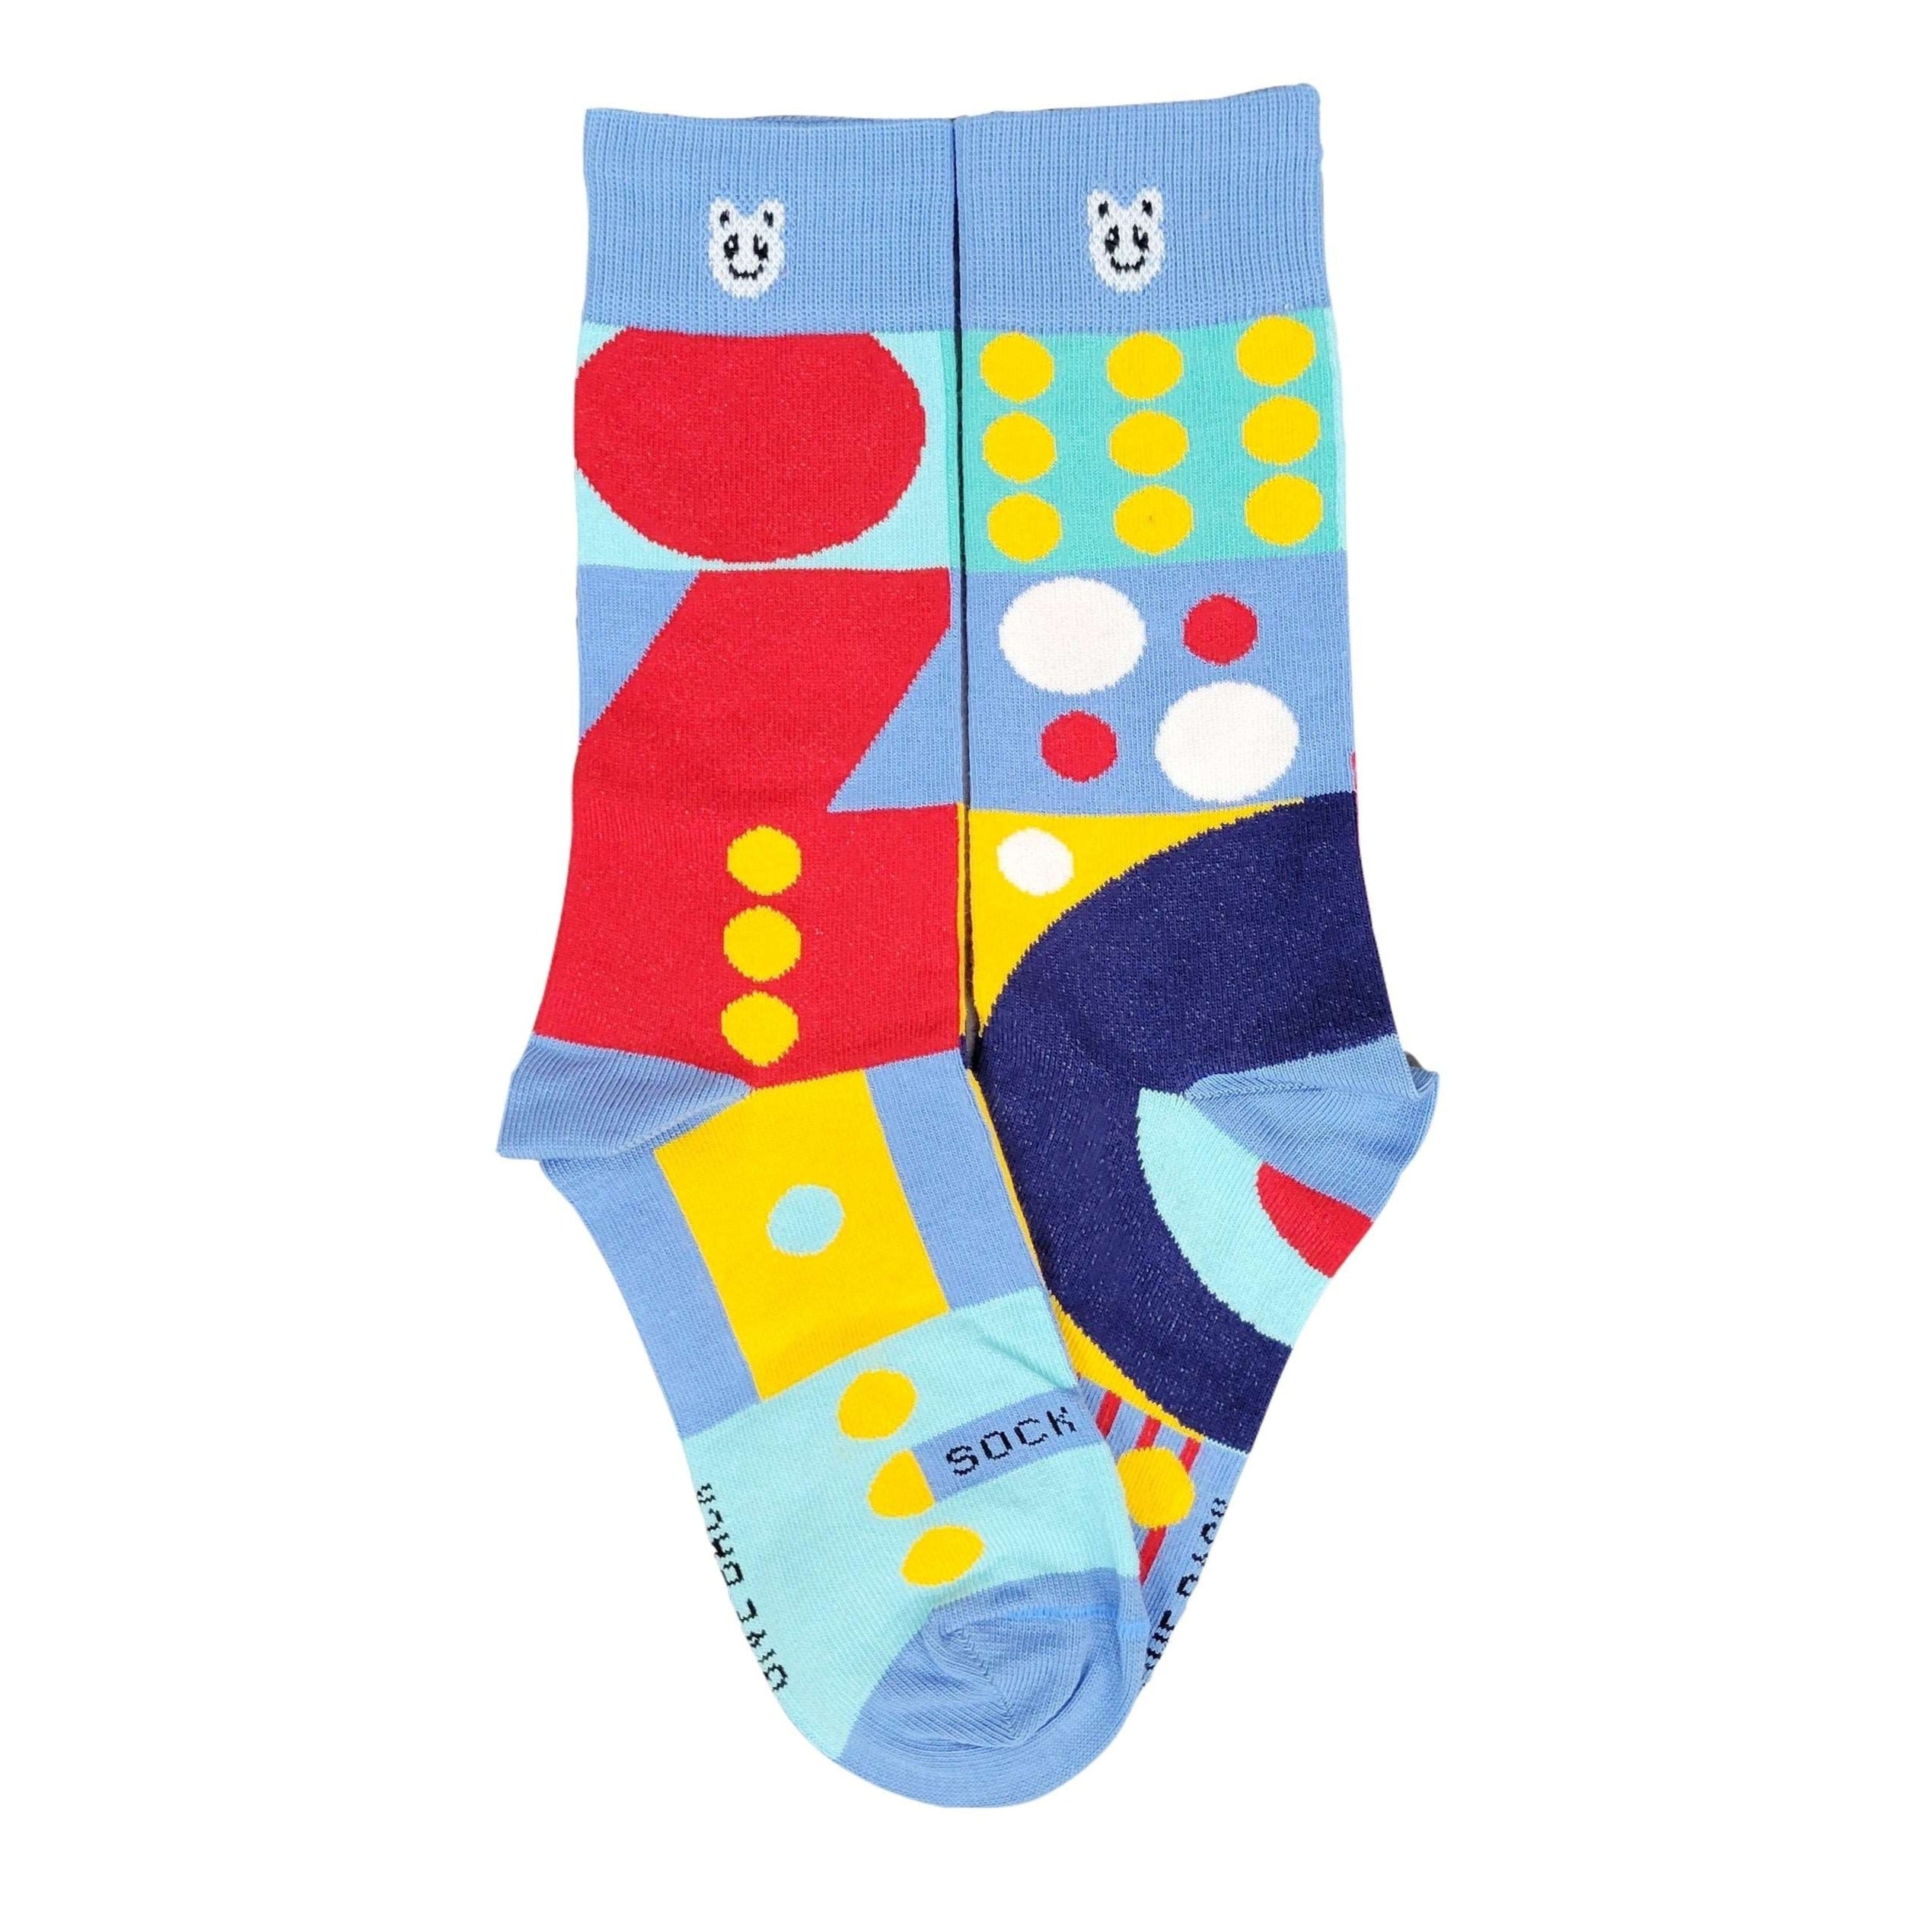 Paradox Yoga Socks pattern by 12 Little Things